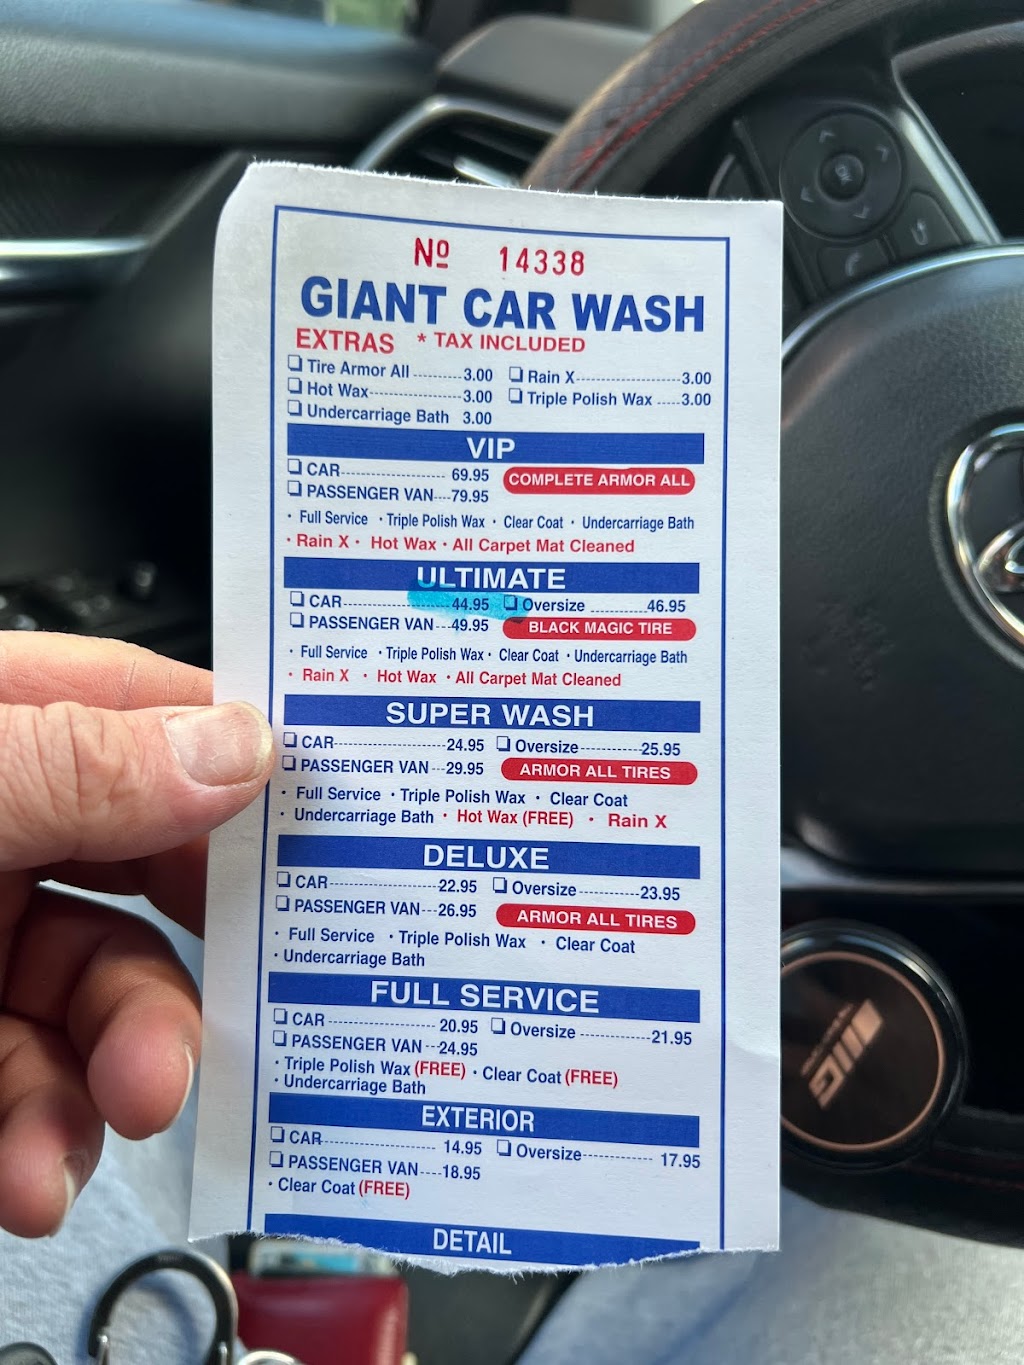 Giant Car Wash | 664 Coney Island Ave, Brooklyn, NY 11218 | Phone: (718) 826-2760